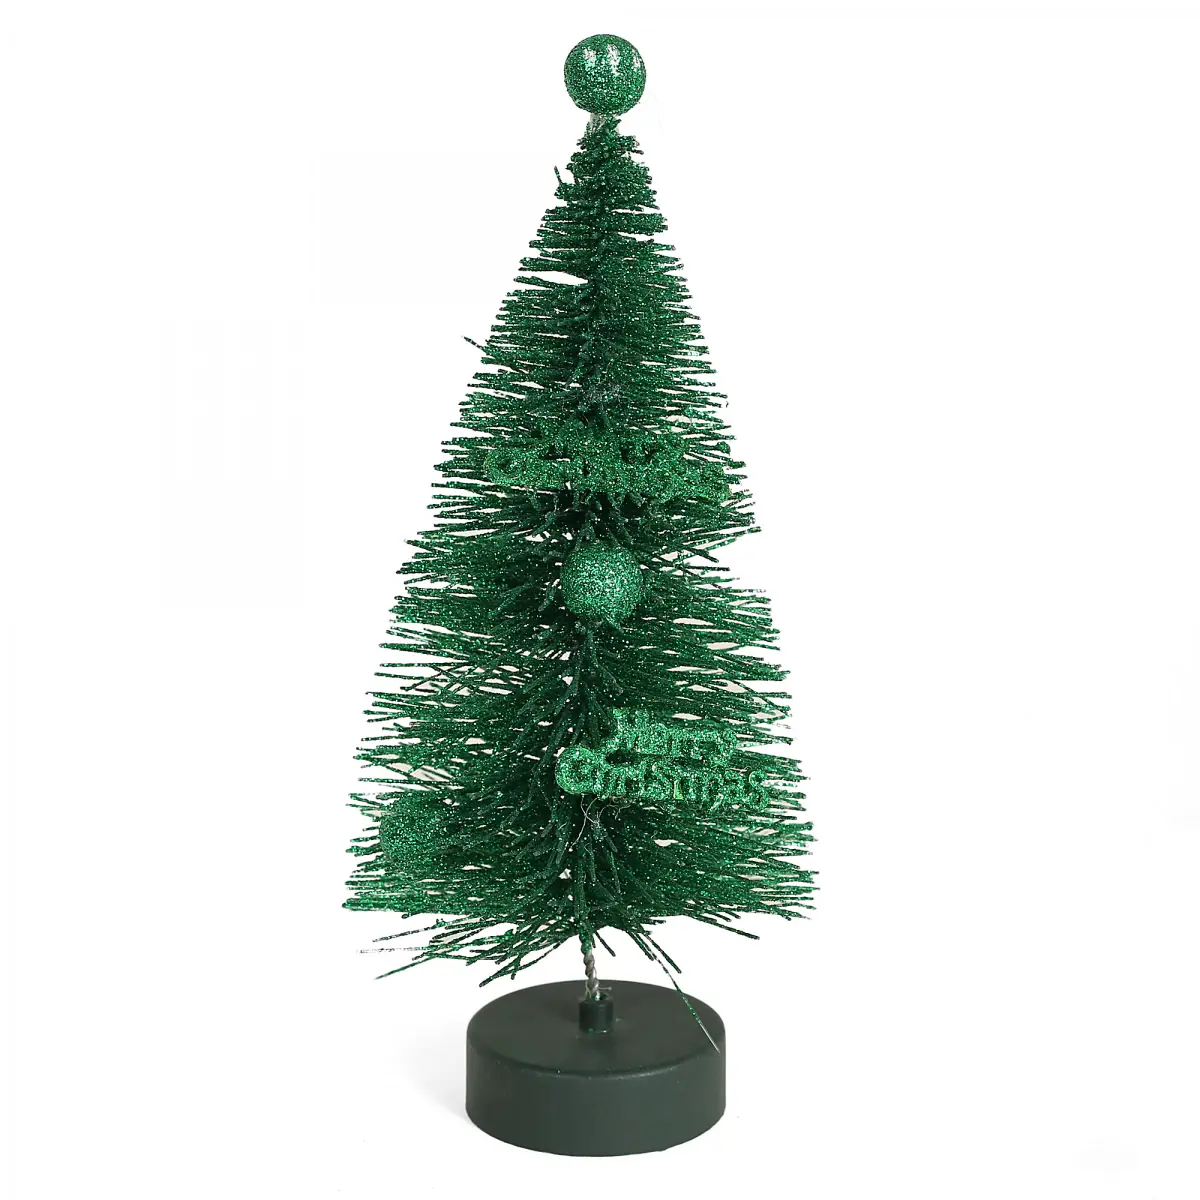 Boing Christmas Tree Decorations, 22cm, Green